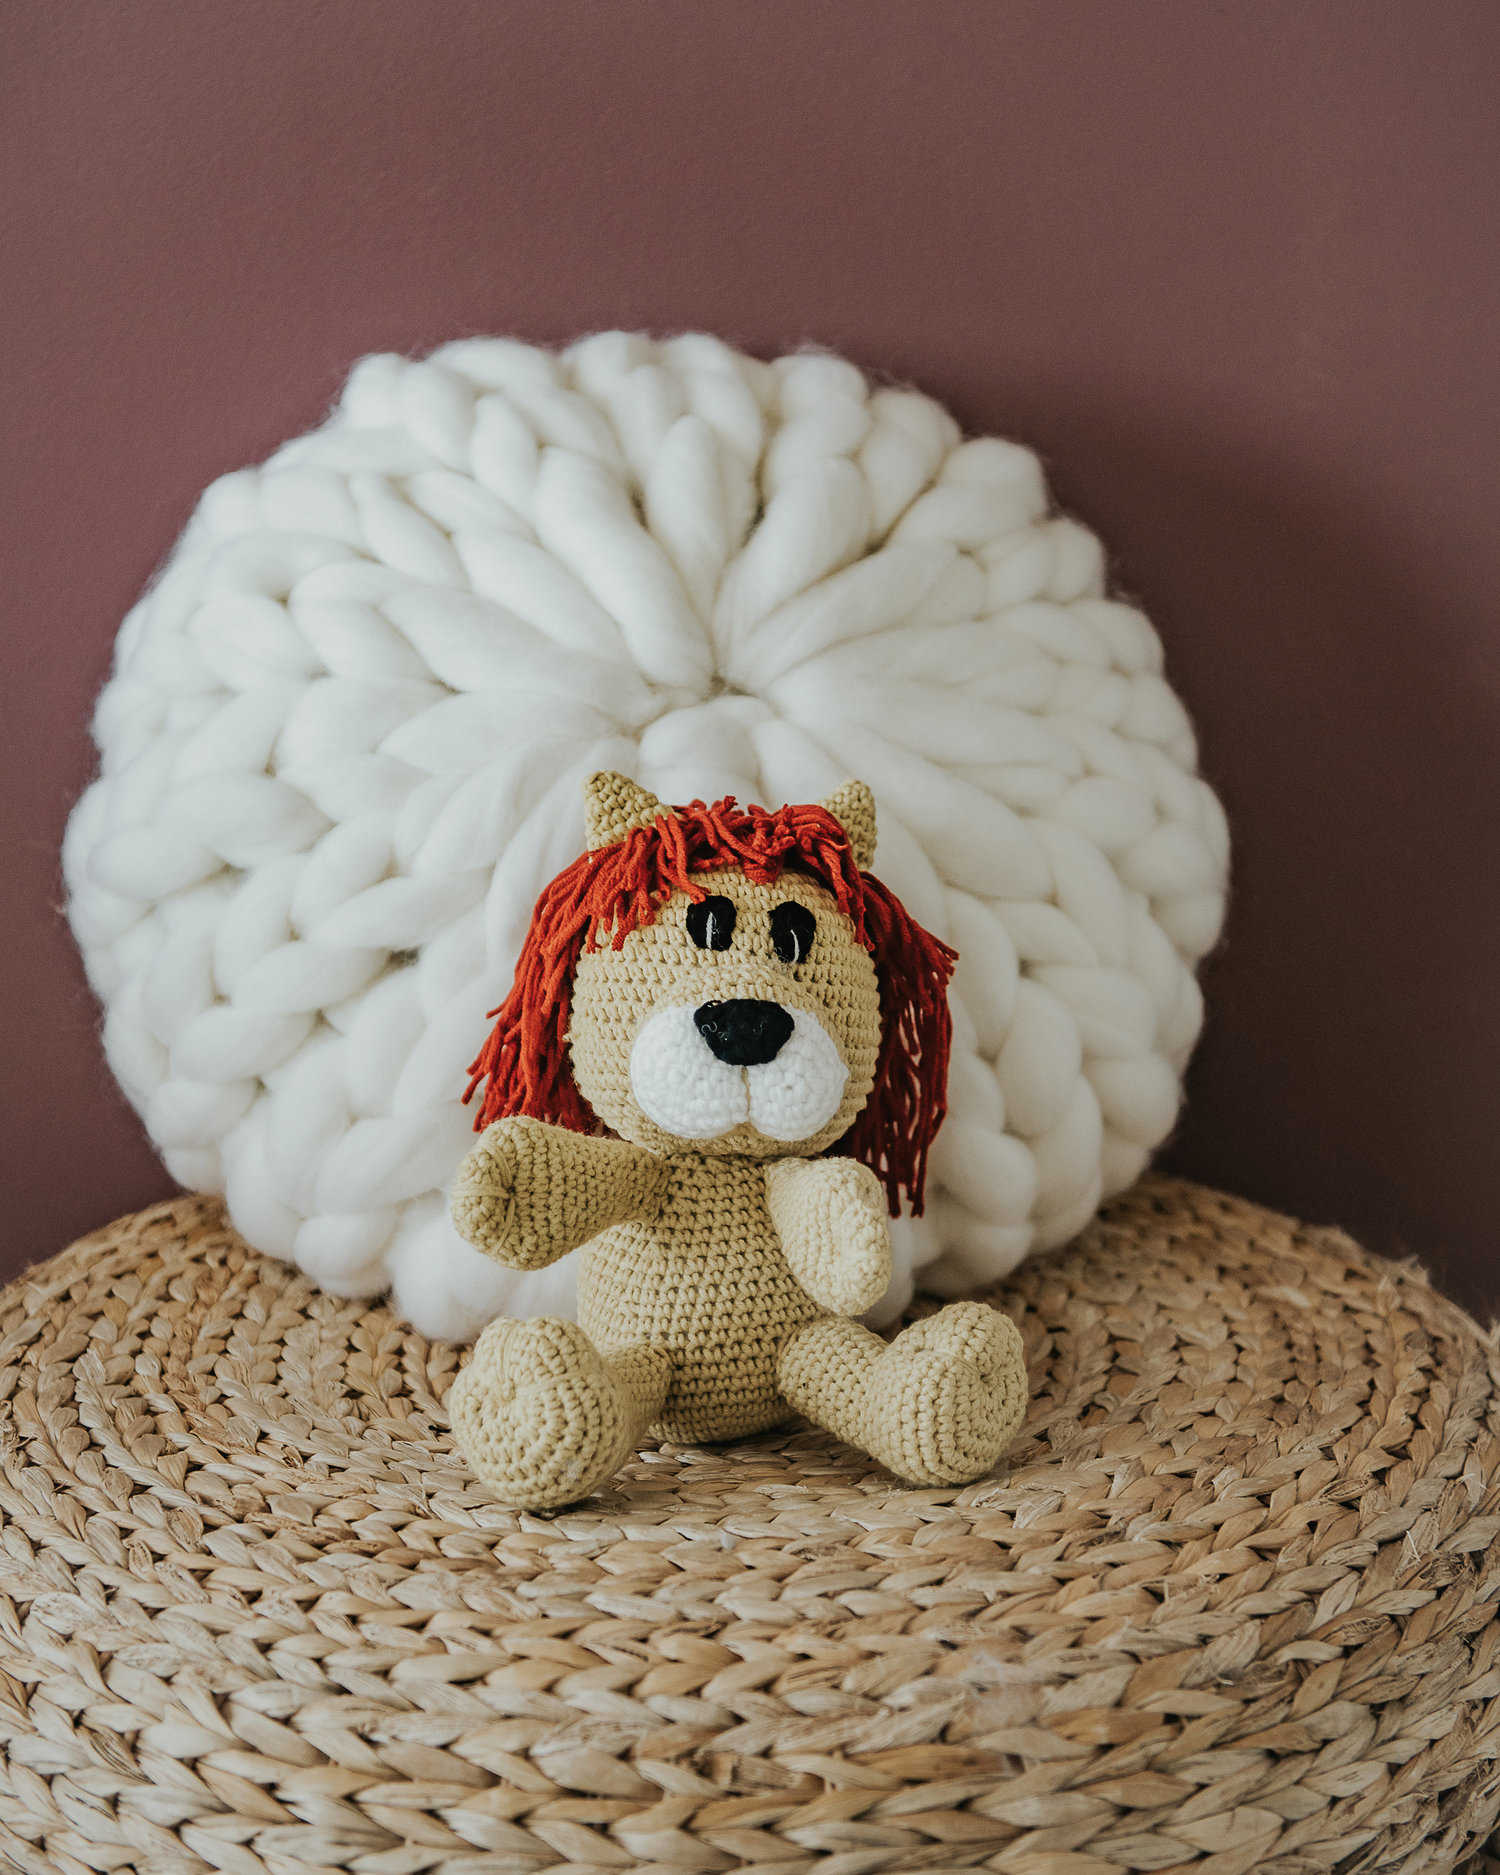 Crochet Animals $45 | Lane & Mae